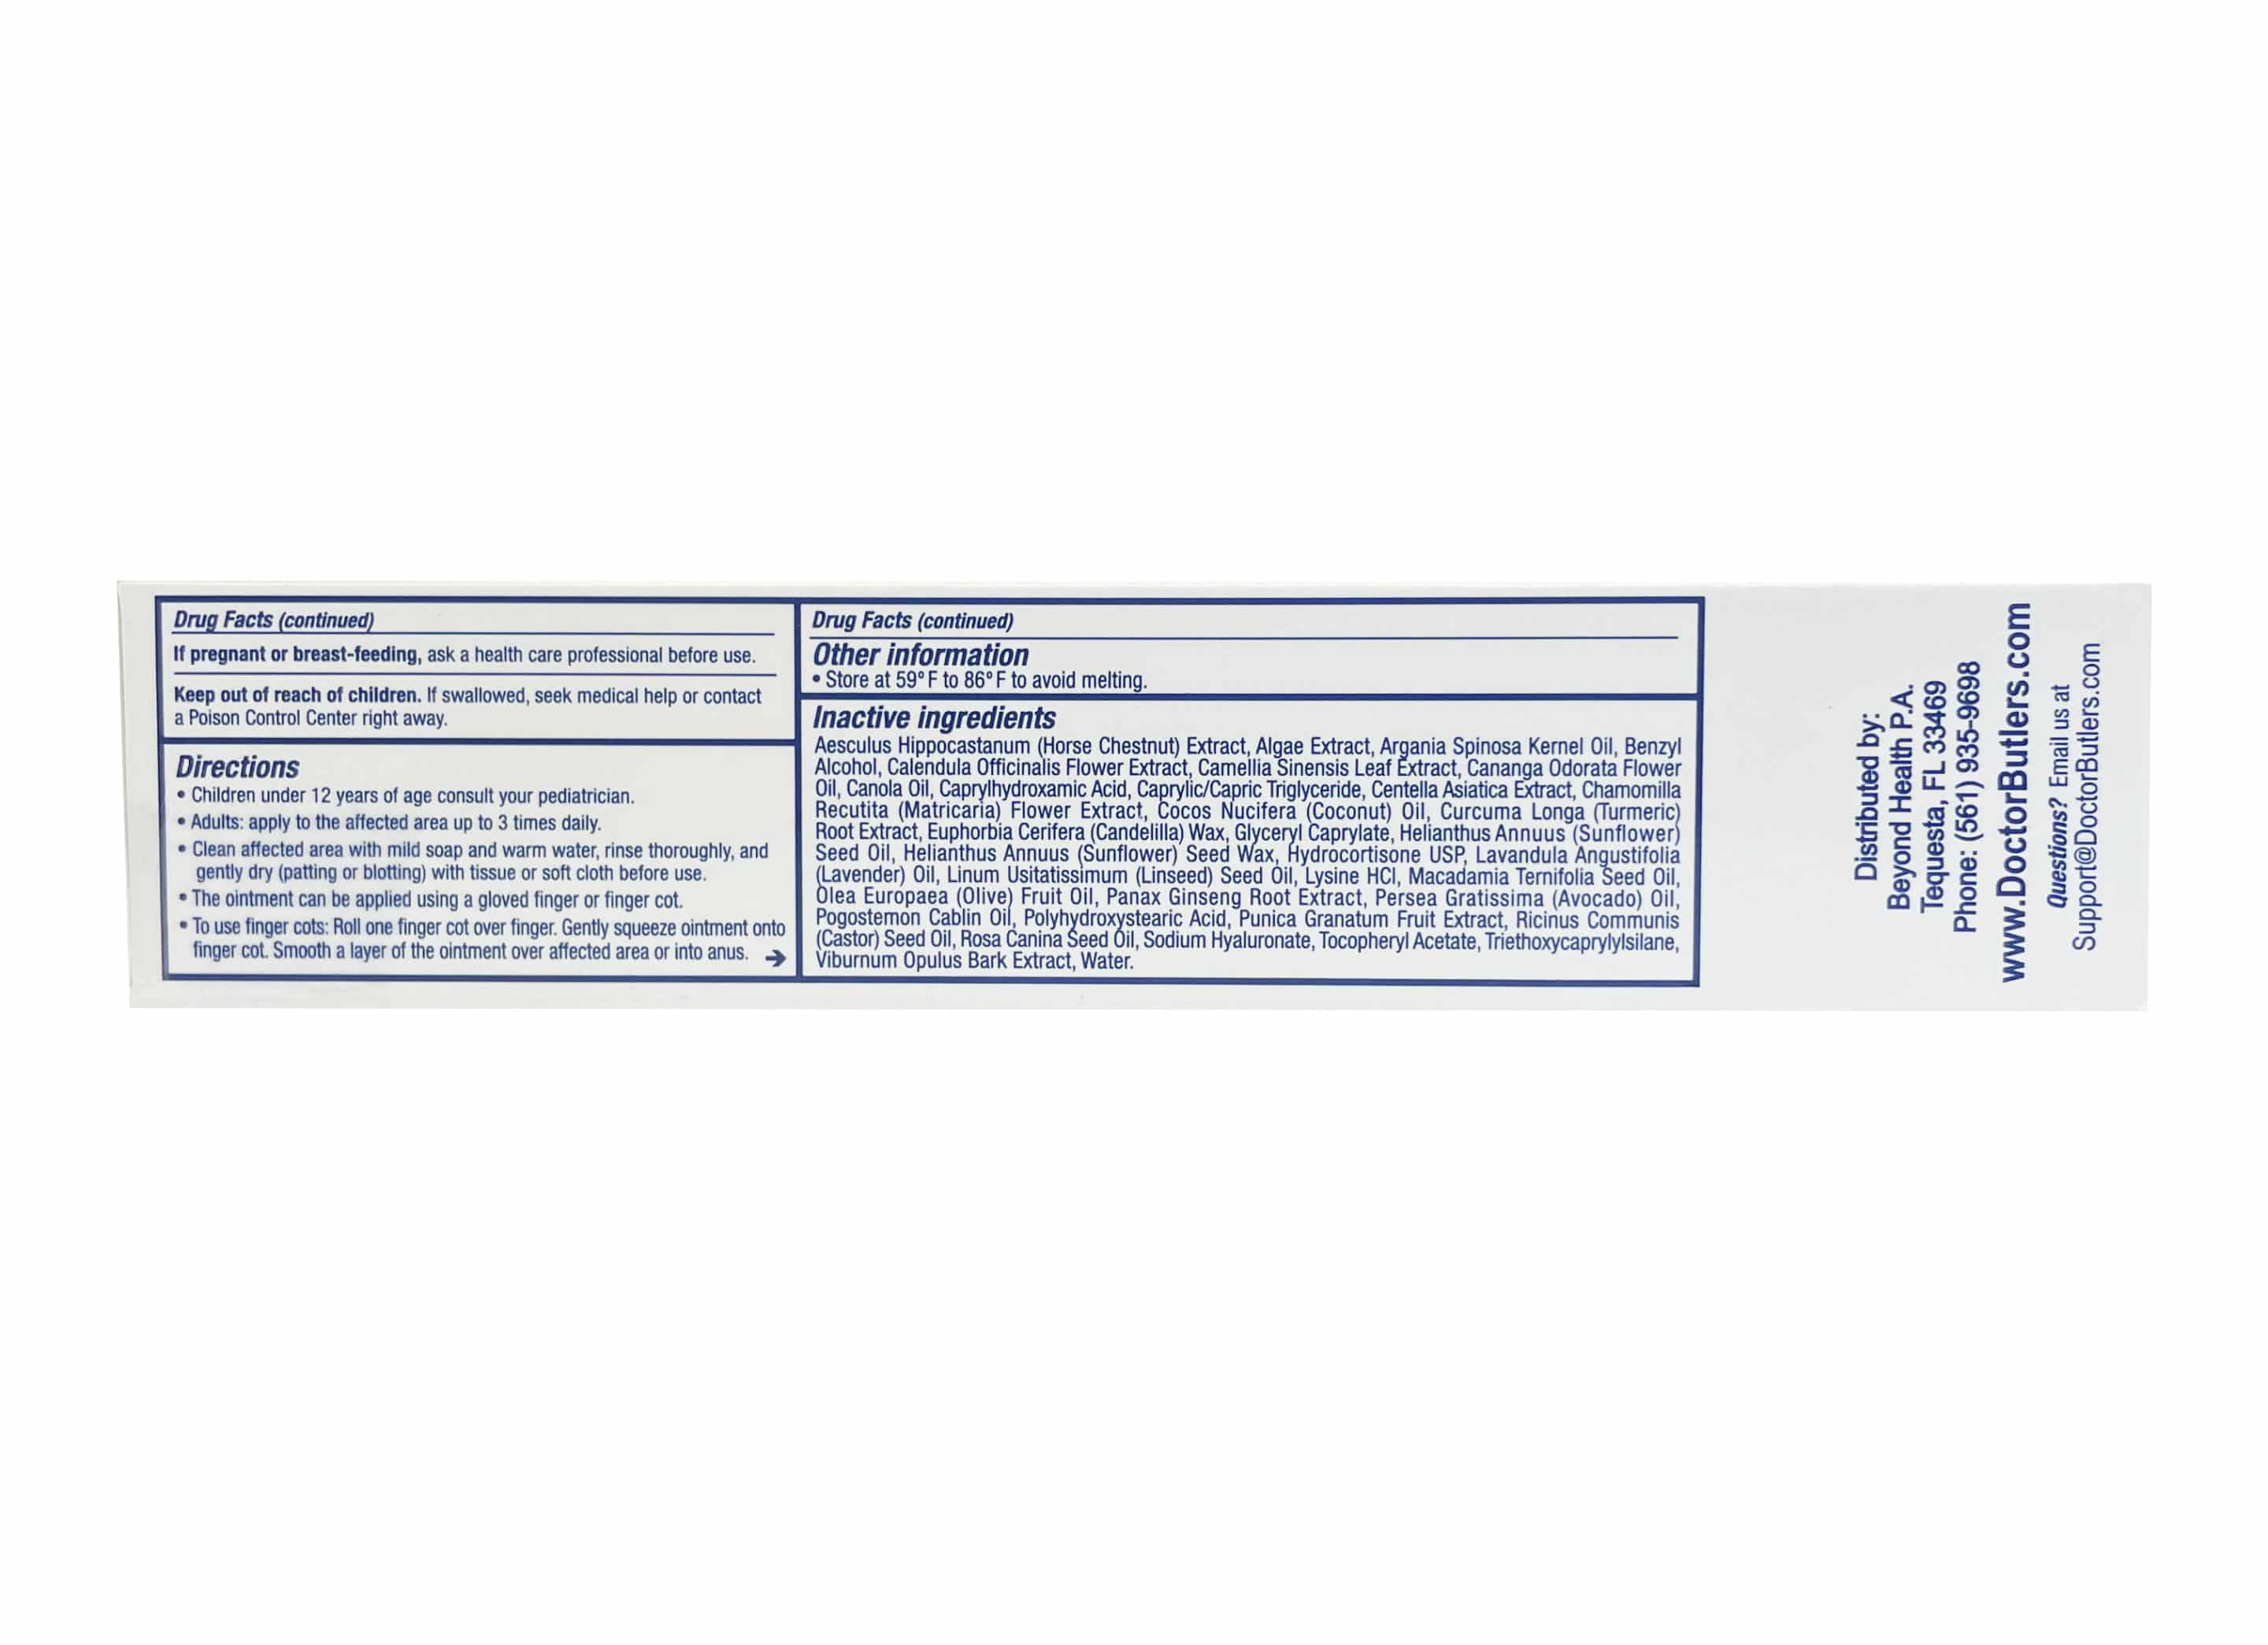 Hemorrhoid Cream with Lidocaine: Advanced Formula